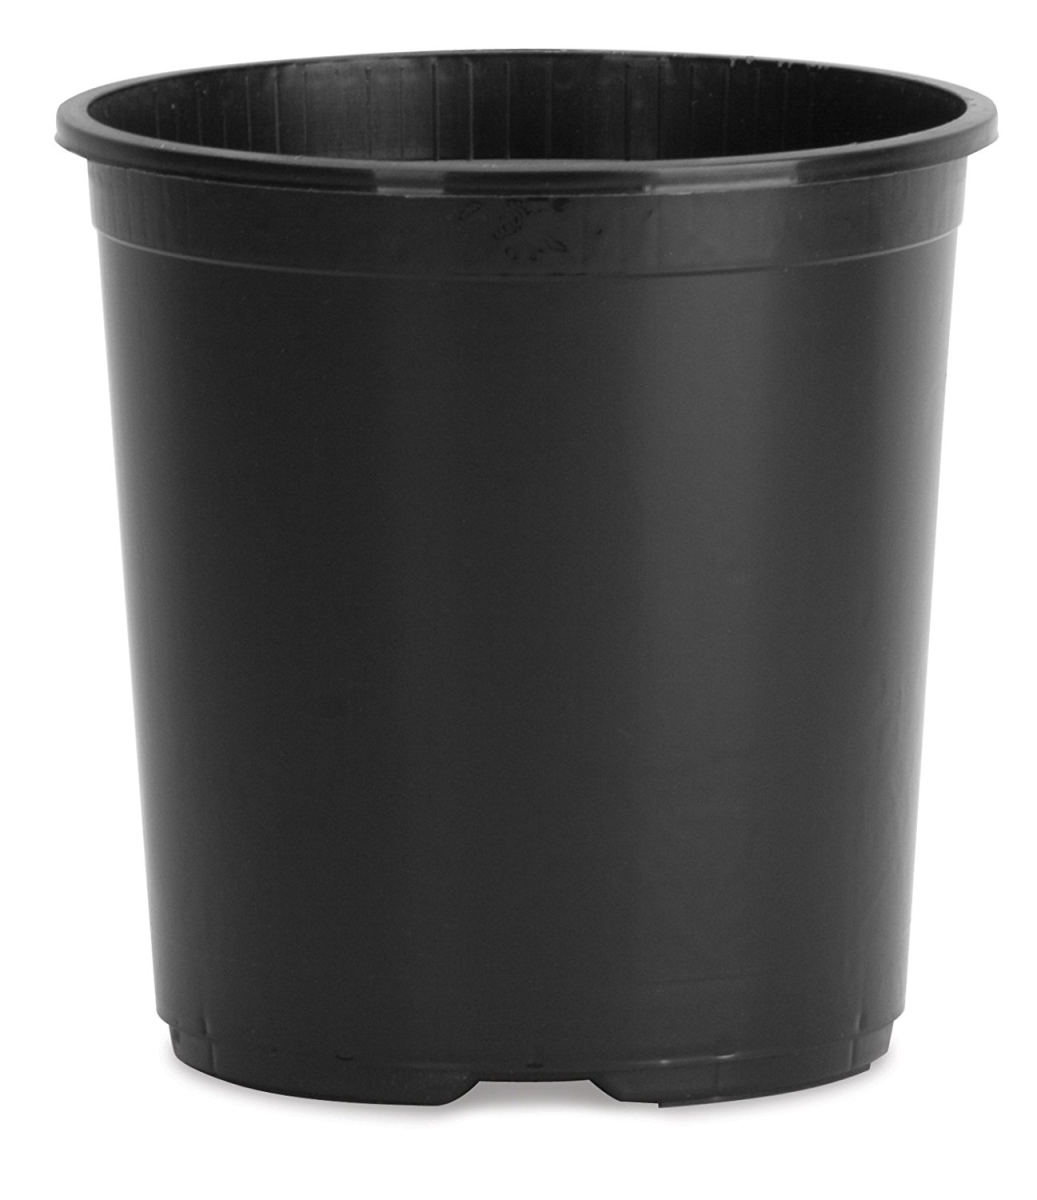 Nursery Planter Container - Black, 15 Gal